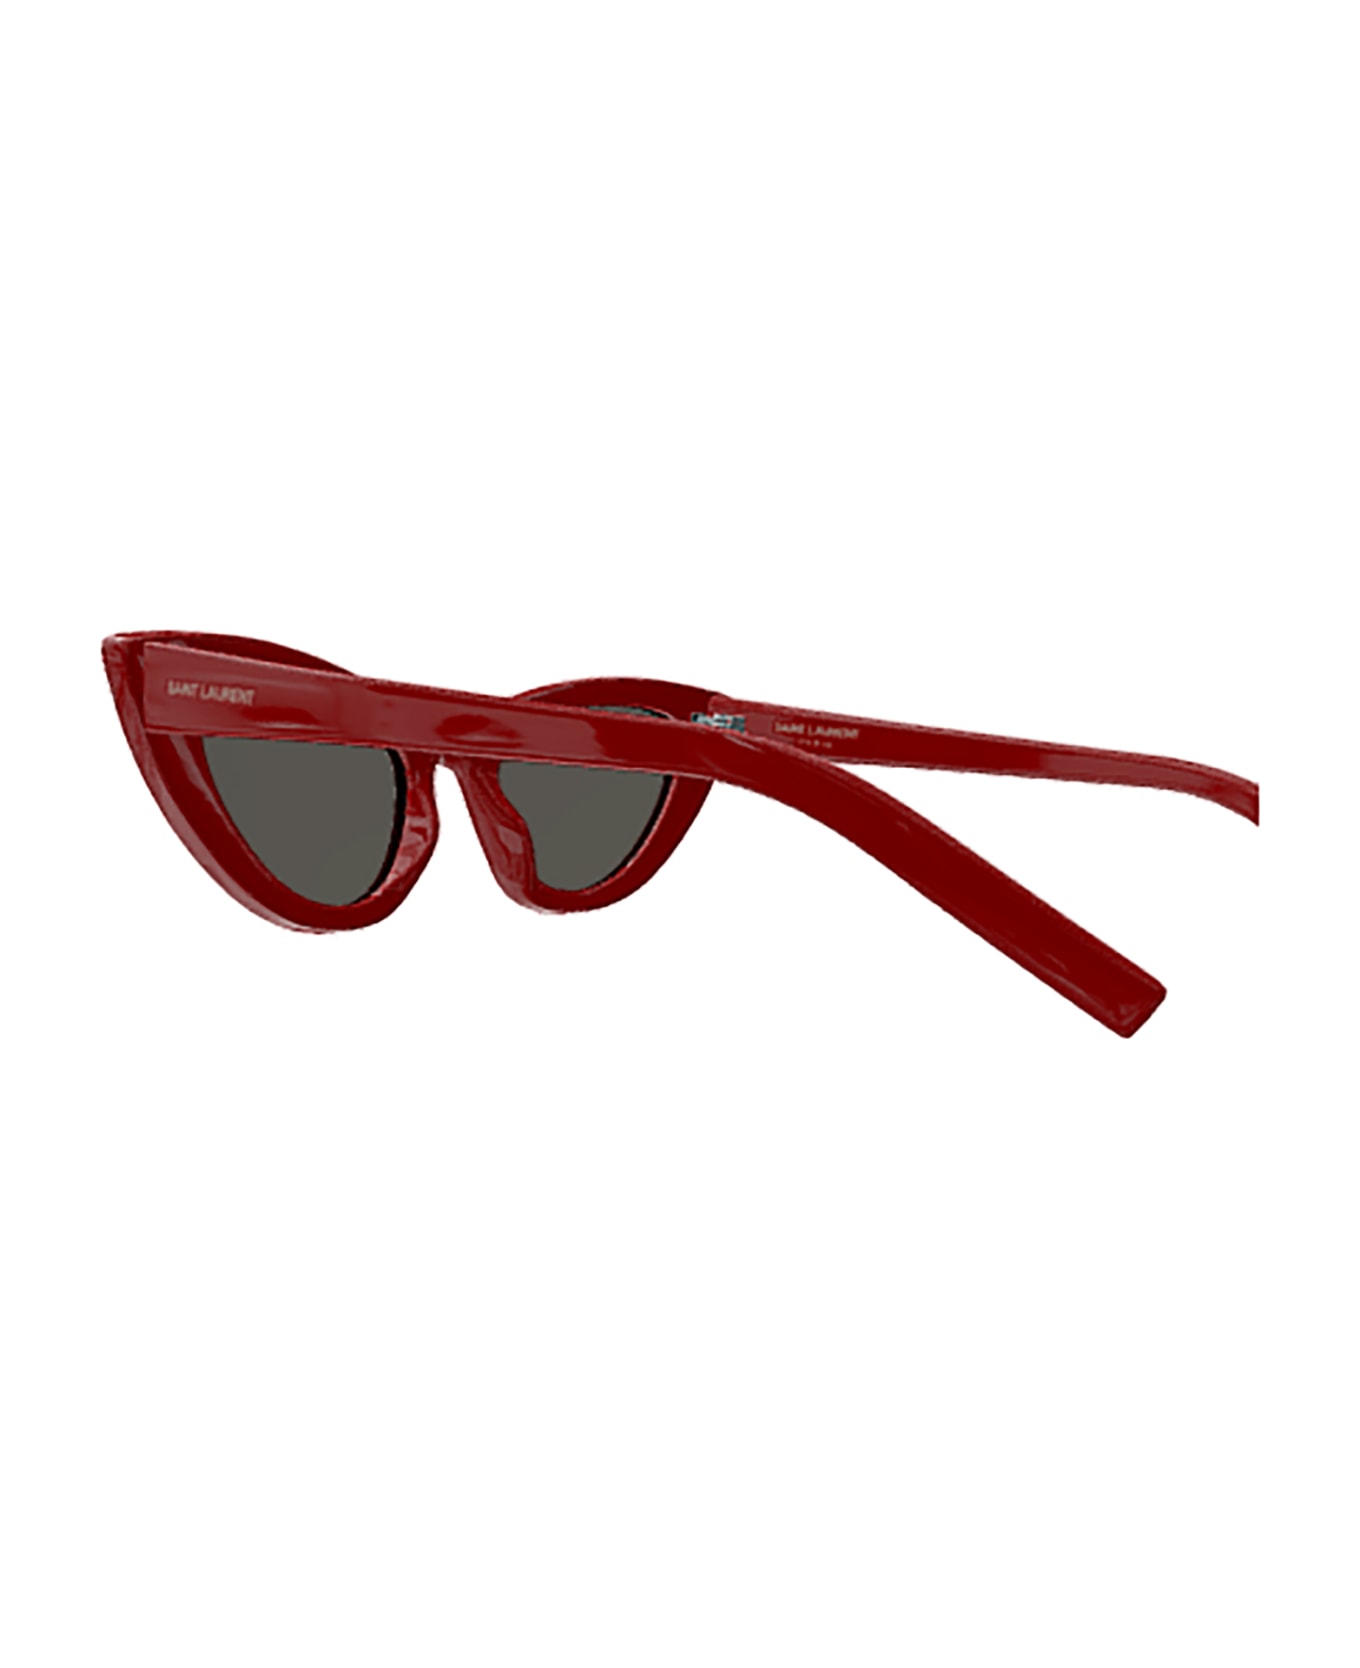 Saint Laurent Eyewear SL 213 LILY Sunglasses - Red Red Grey